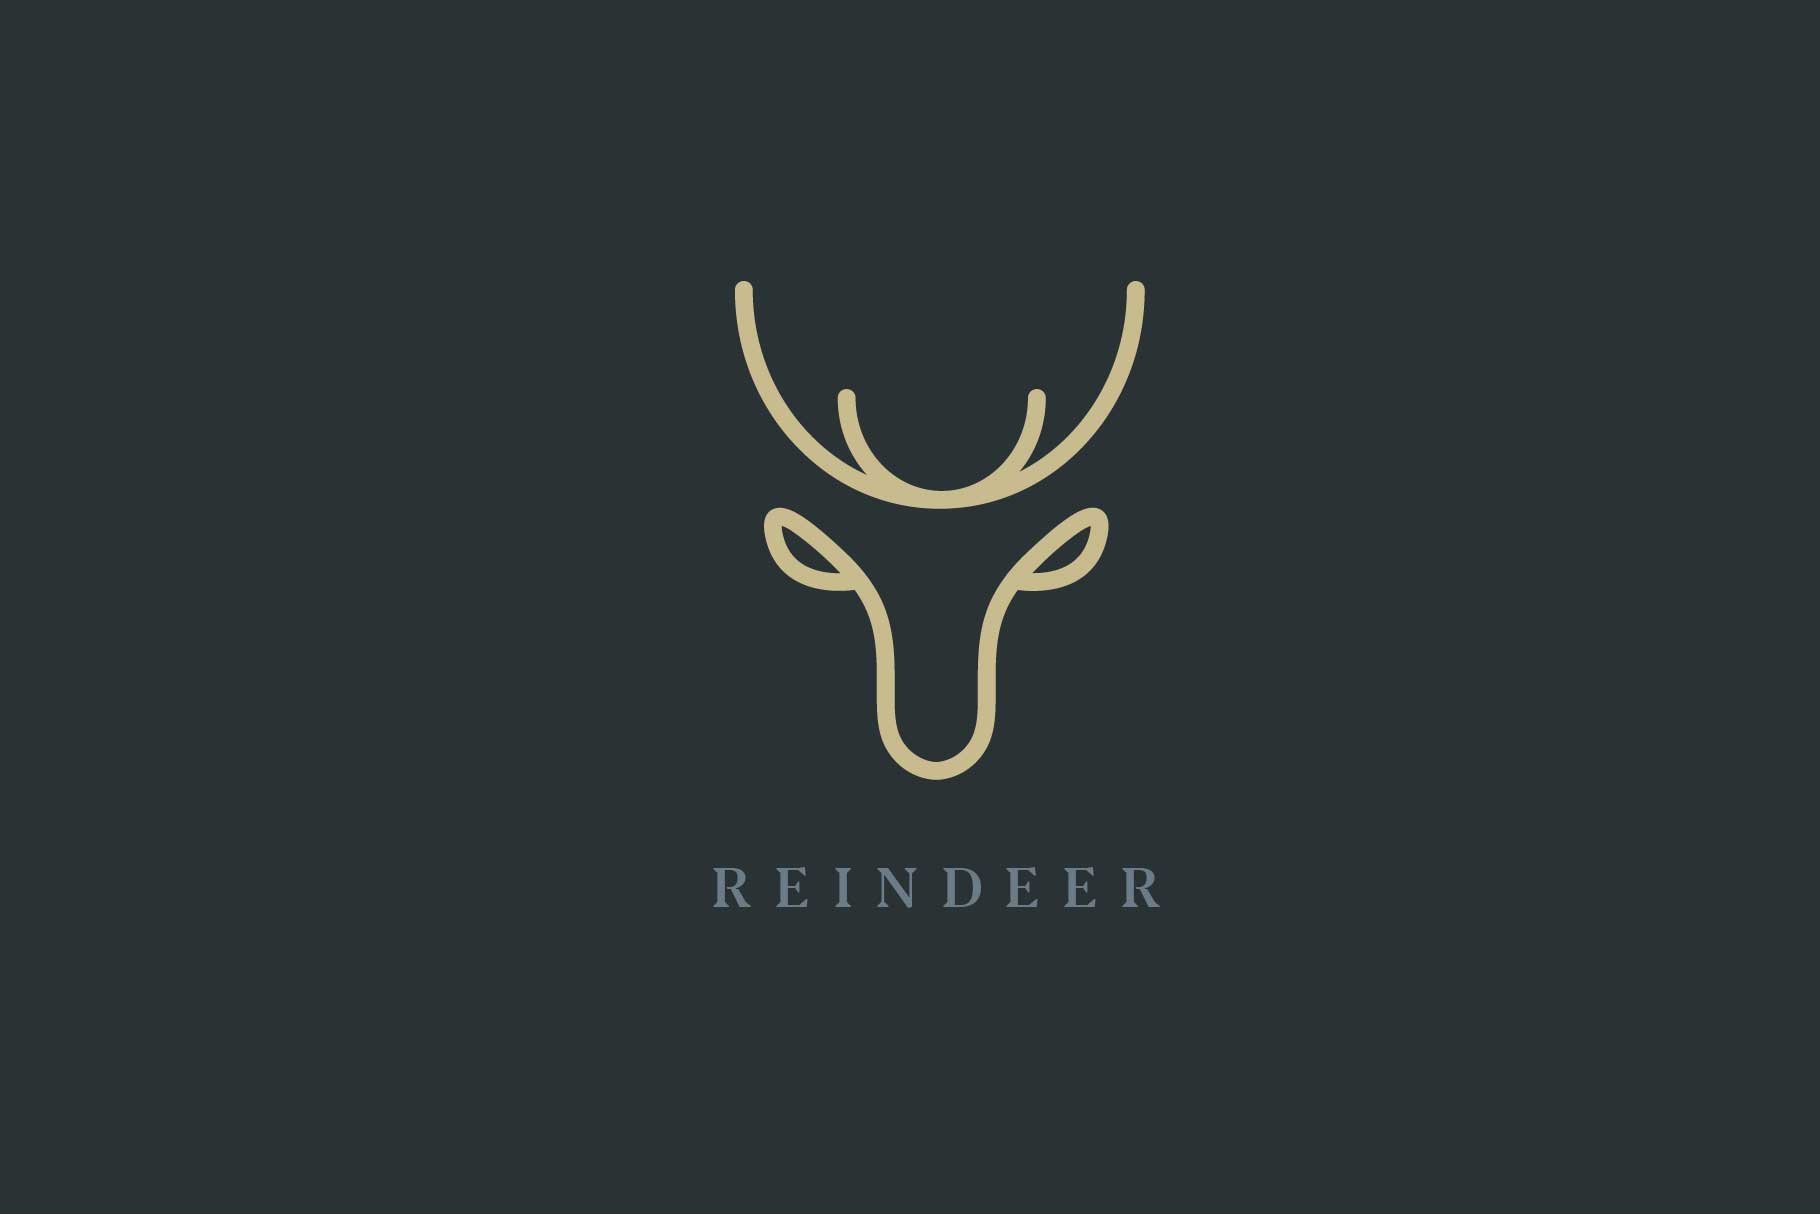 Black background with minimal deer logo.